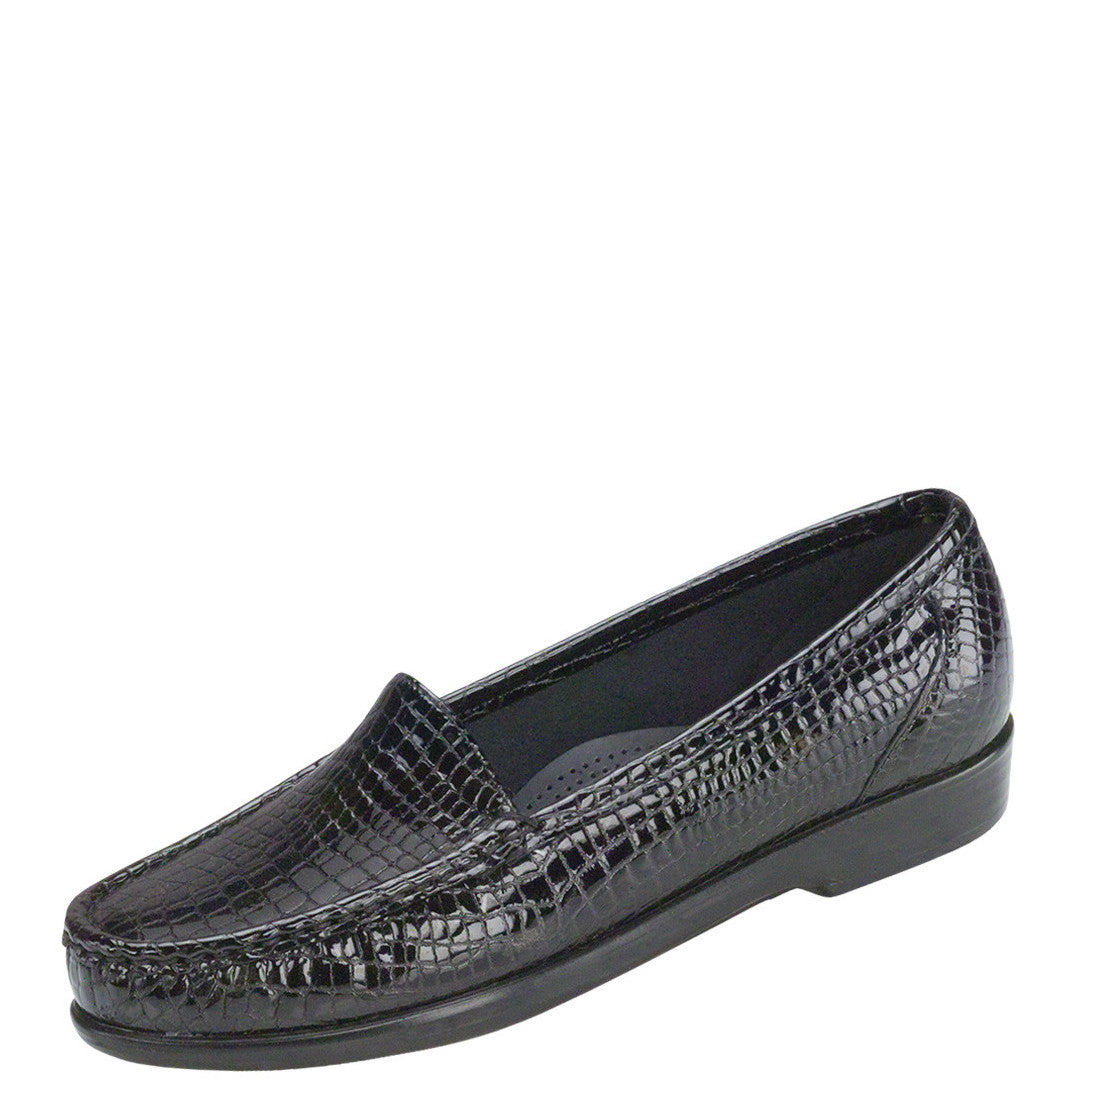 BLK CROC | SAS Women's Simplify Slip on Shoe - Black Croc at Brandy's Shoes Made in USA